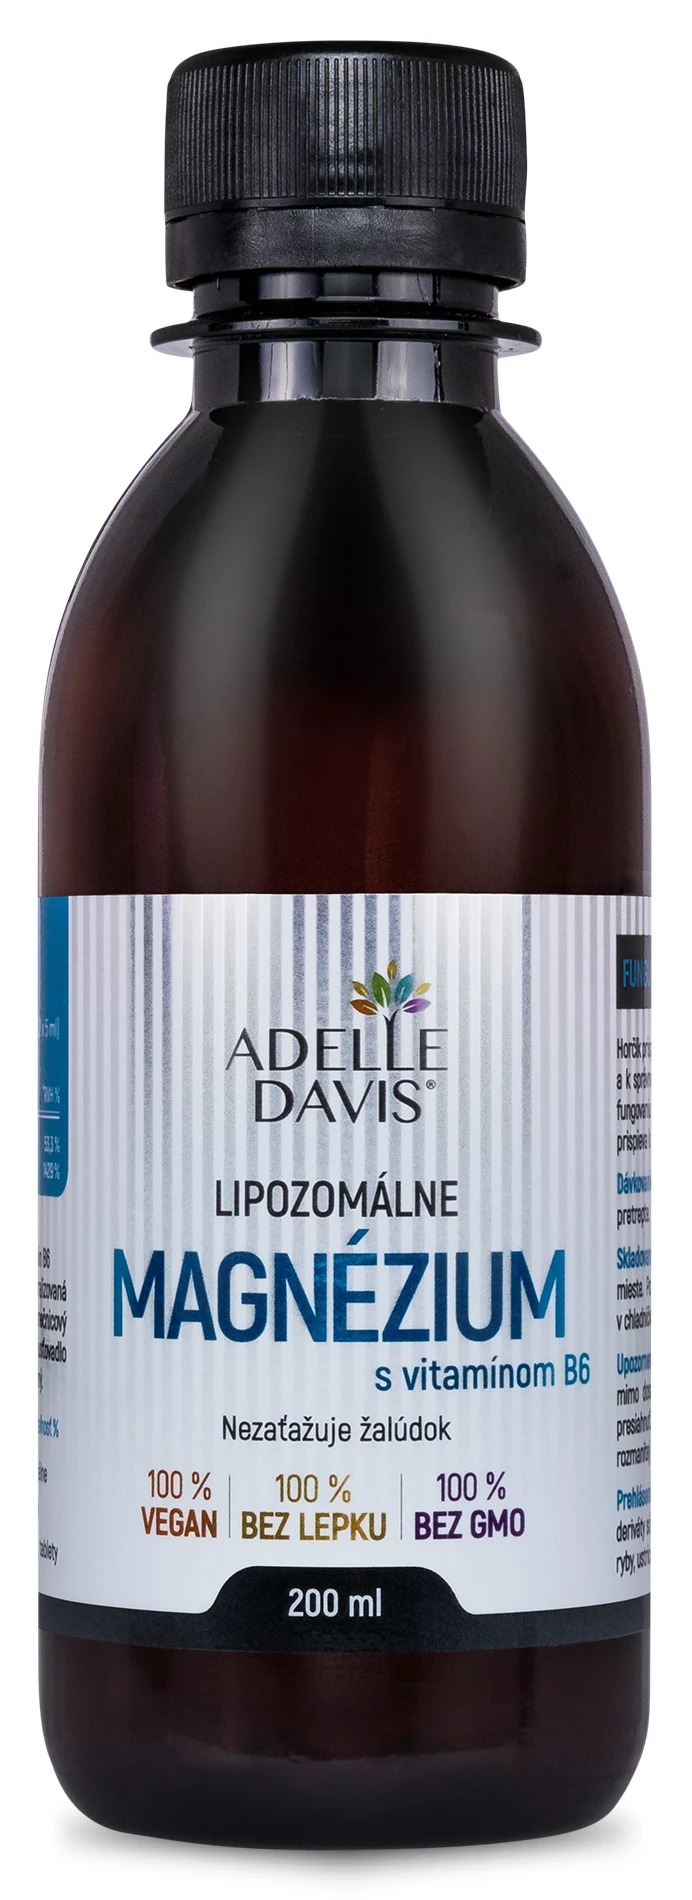 Adelle Davis - Lipozomálne magnézium s vitamínom B6, 200 ml